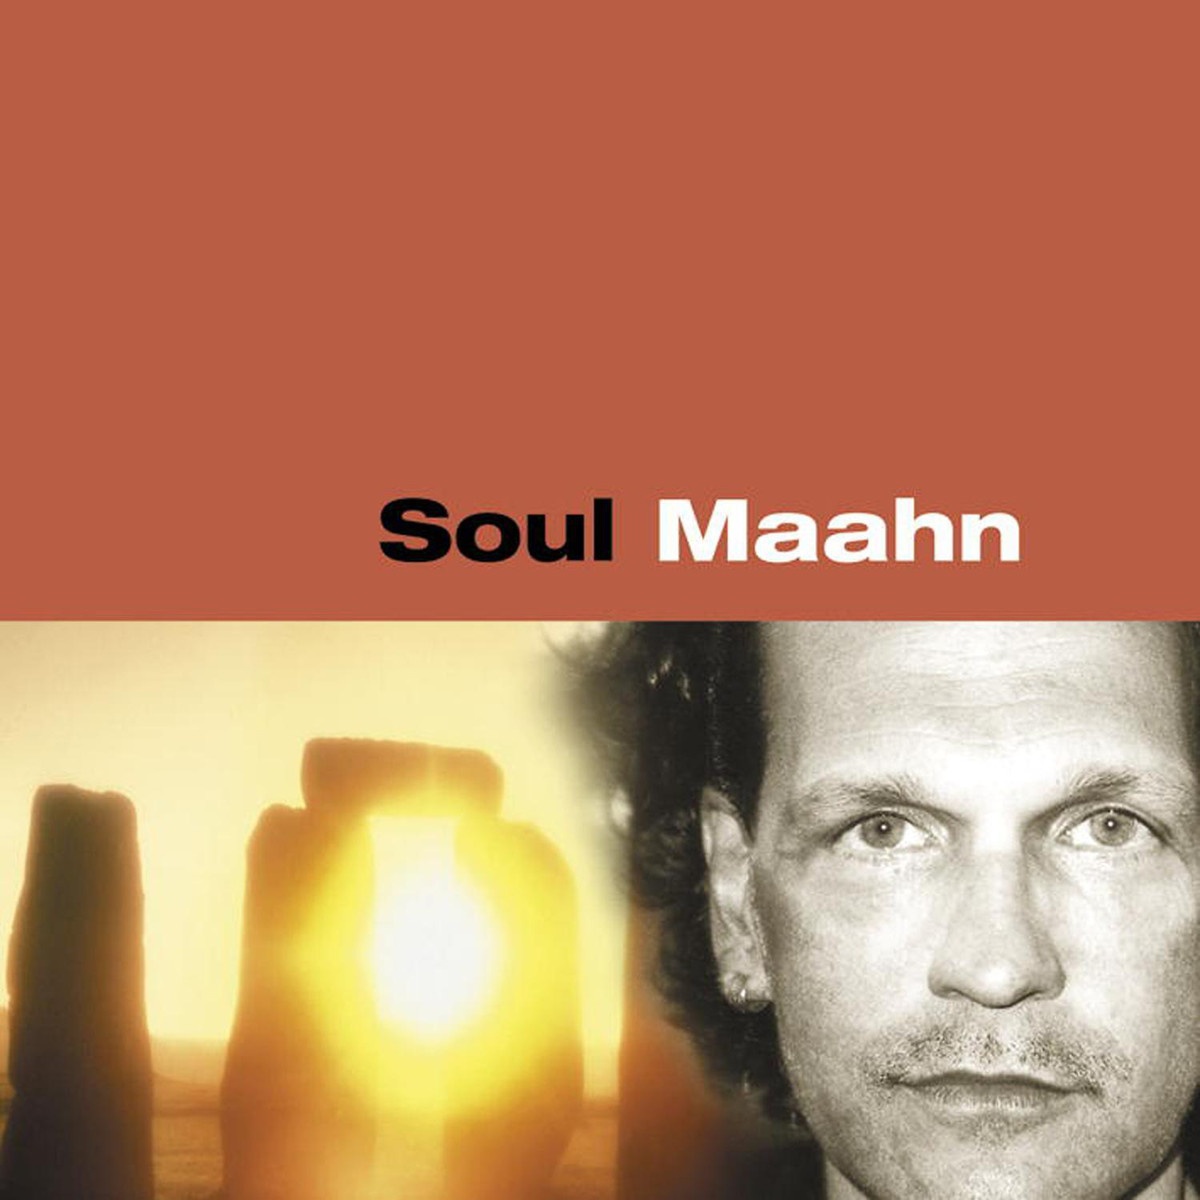 Soul Maahn